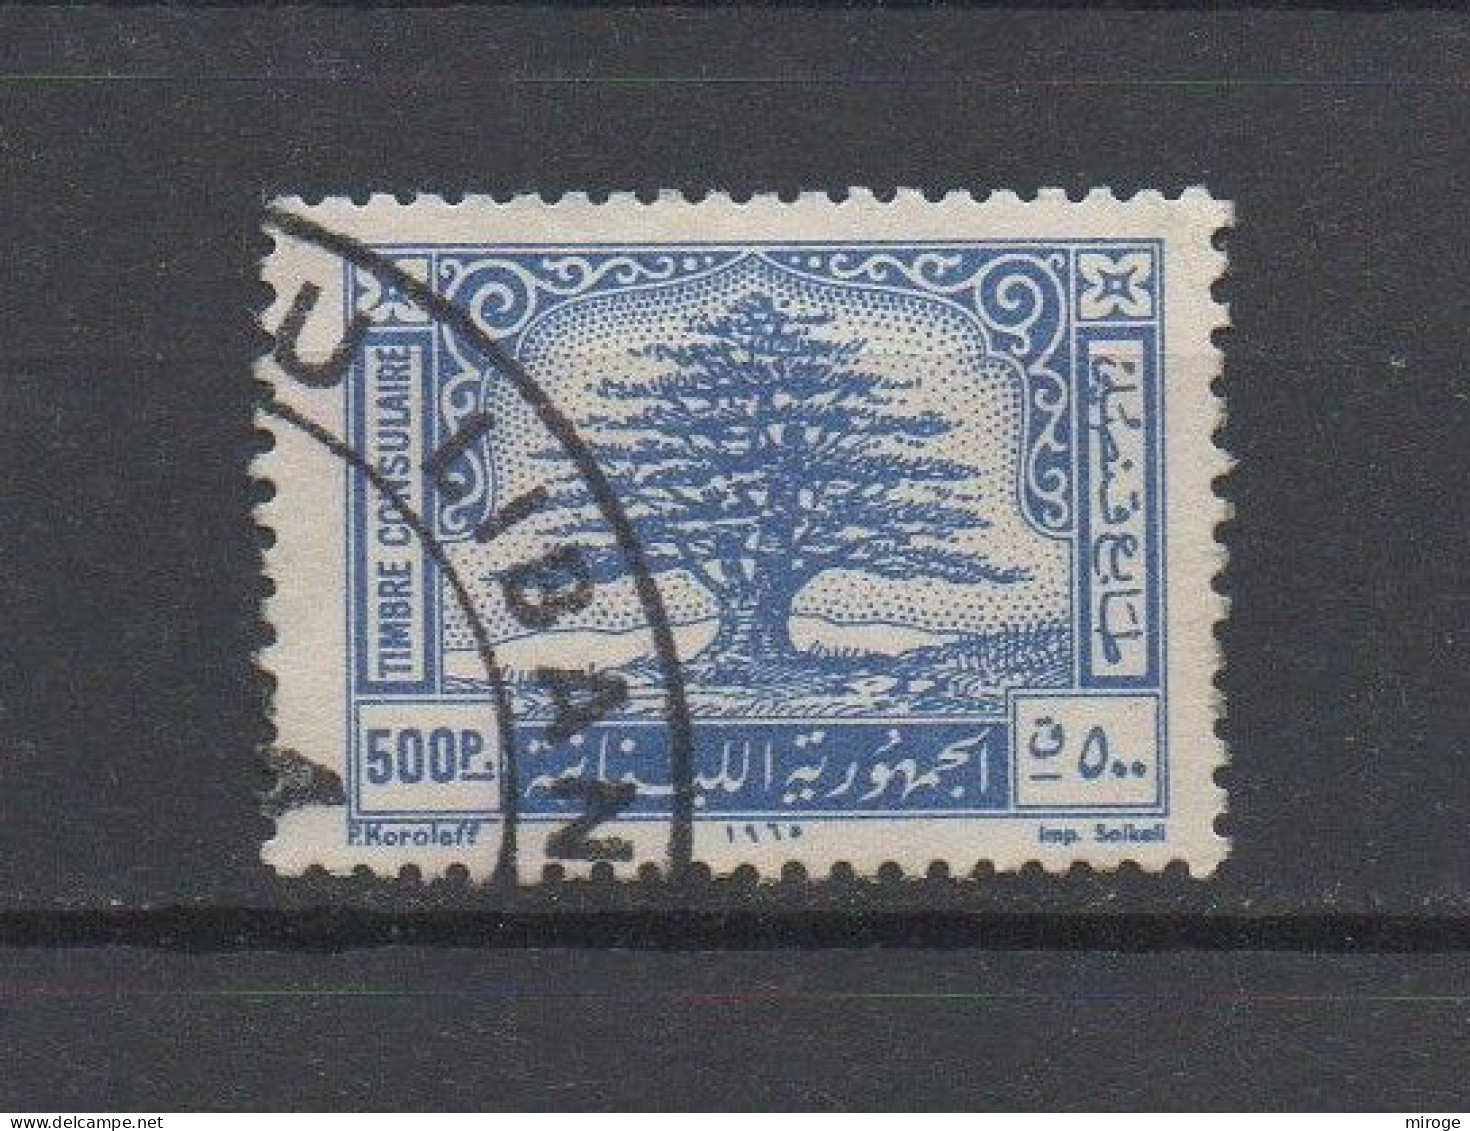 Consular 1965 500p Lebanon Used Stamp Revenue Cedar Design, Liban Libanon - Lebanon